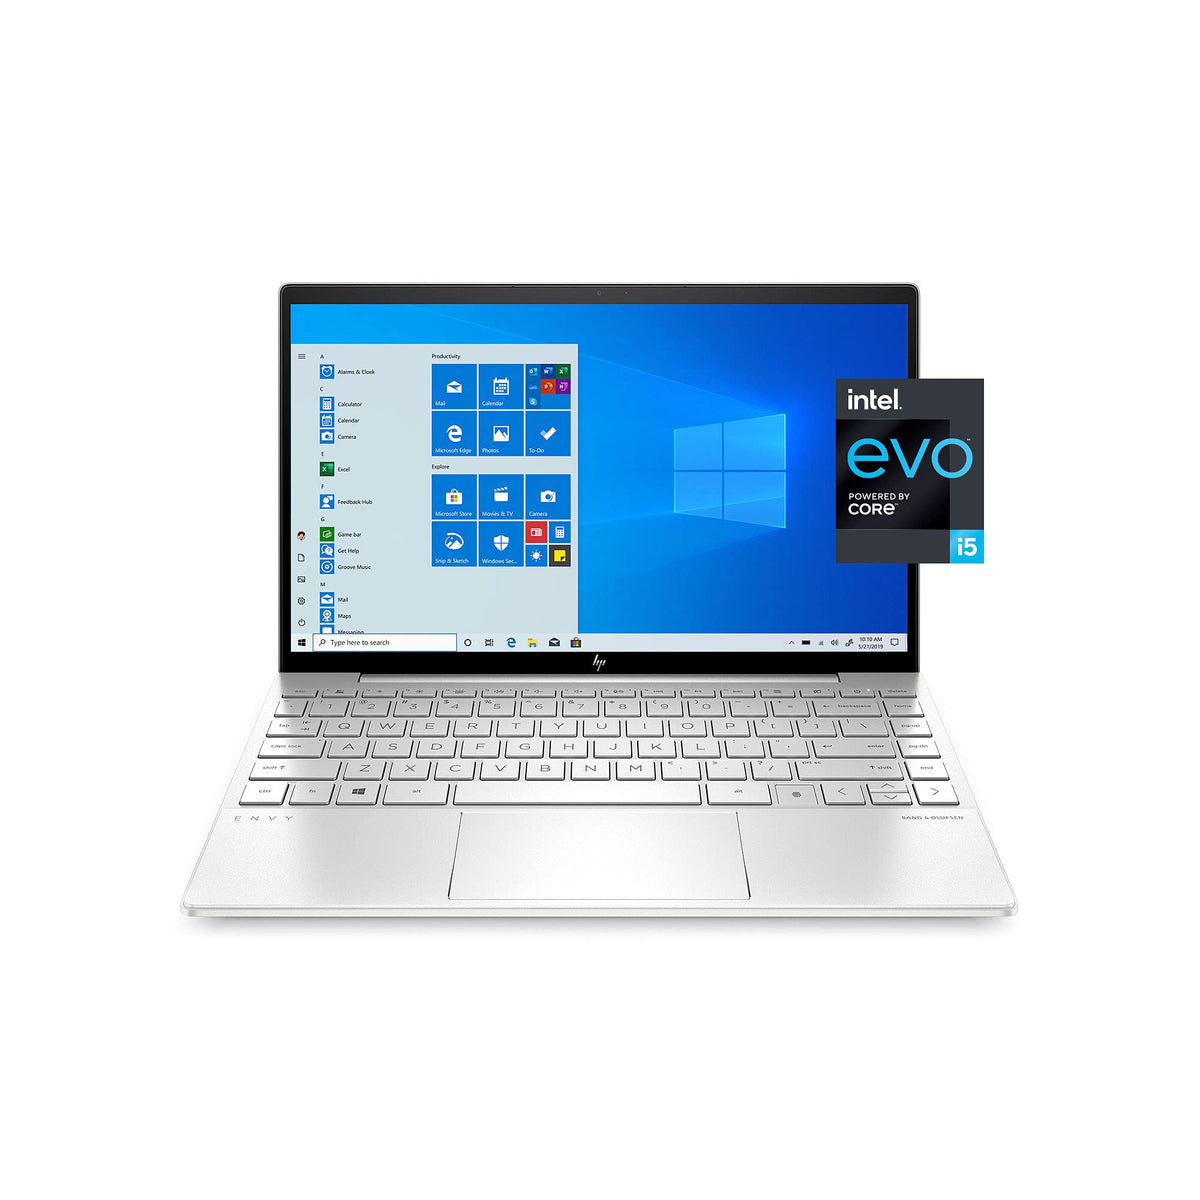 HP 2021 Newest Envy Laptop, 13.3" FHD Non-Touch 400nits Display, 11th Gen Intel Core i5-1135G7 Quad-Core Processor, 8GB RAM, 256GB PCIe NVMe SSD, Wi-Fi, Webcam, Windows 10 Home, Silver